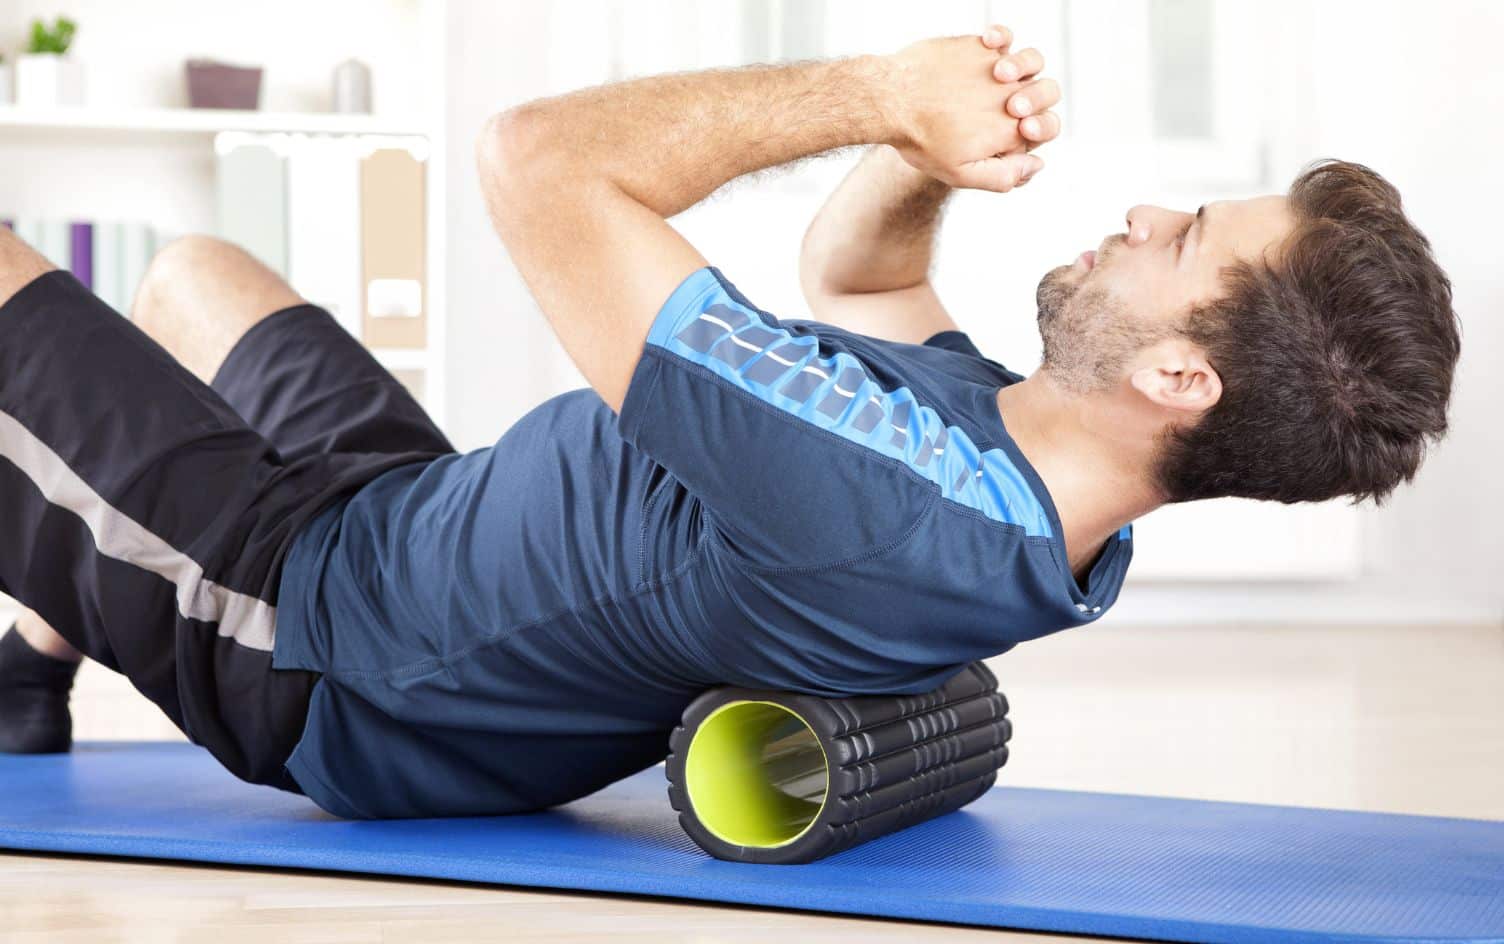 Yoga Foam Massage Roller – Ali Sports